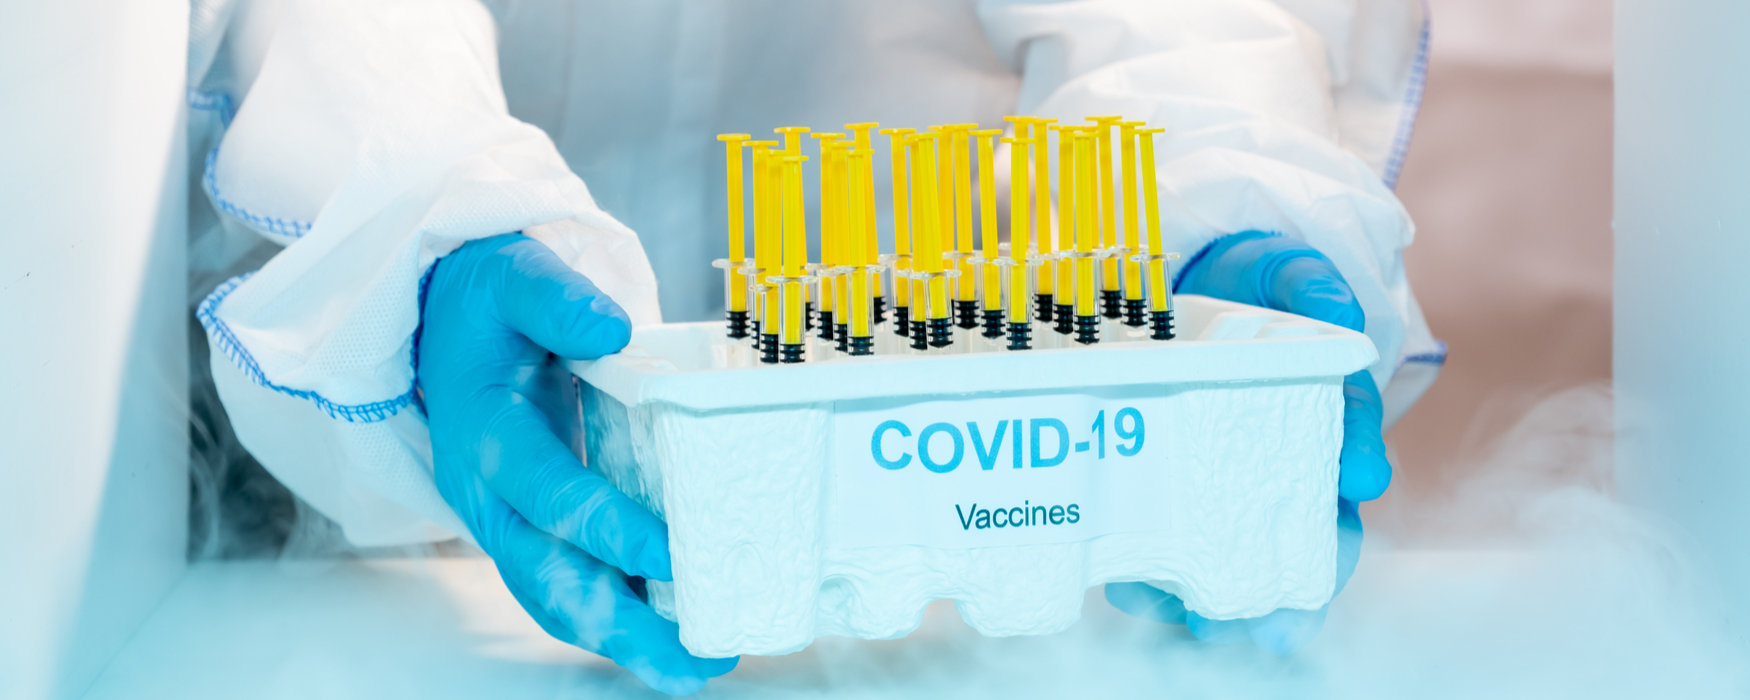 South Dakota covid vaccine freezers - covid 19 vaccine freezer - vaccine storage in South Dakota